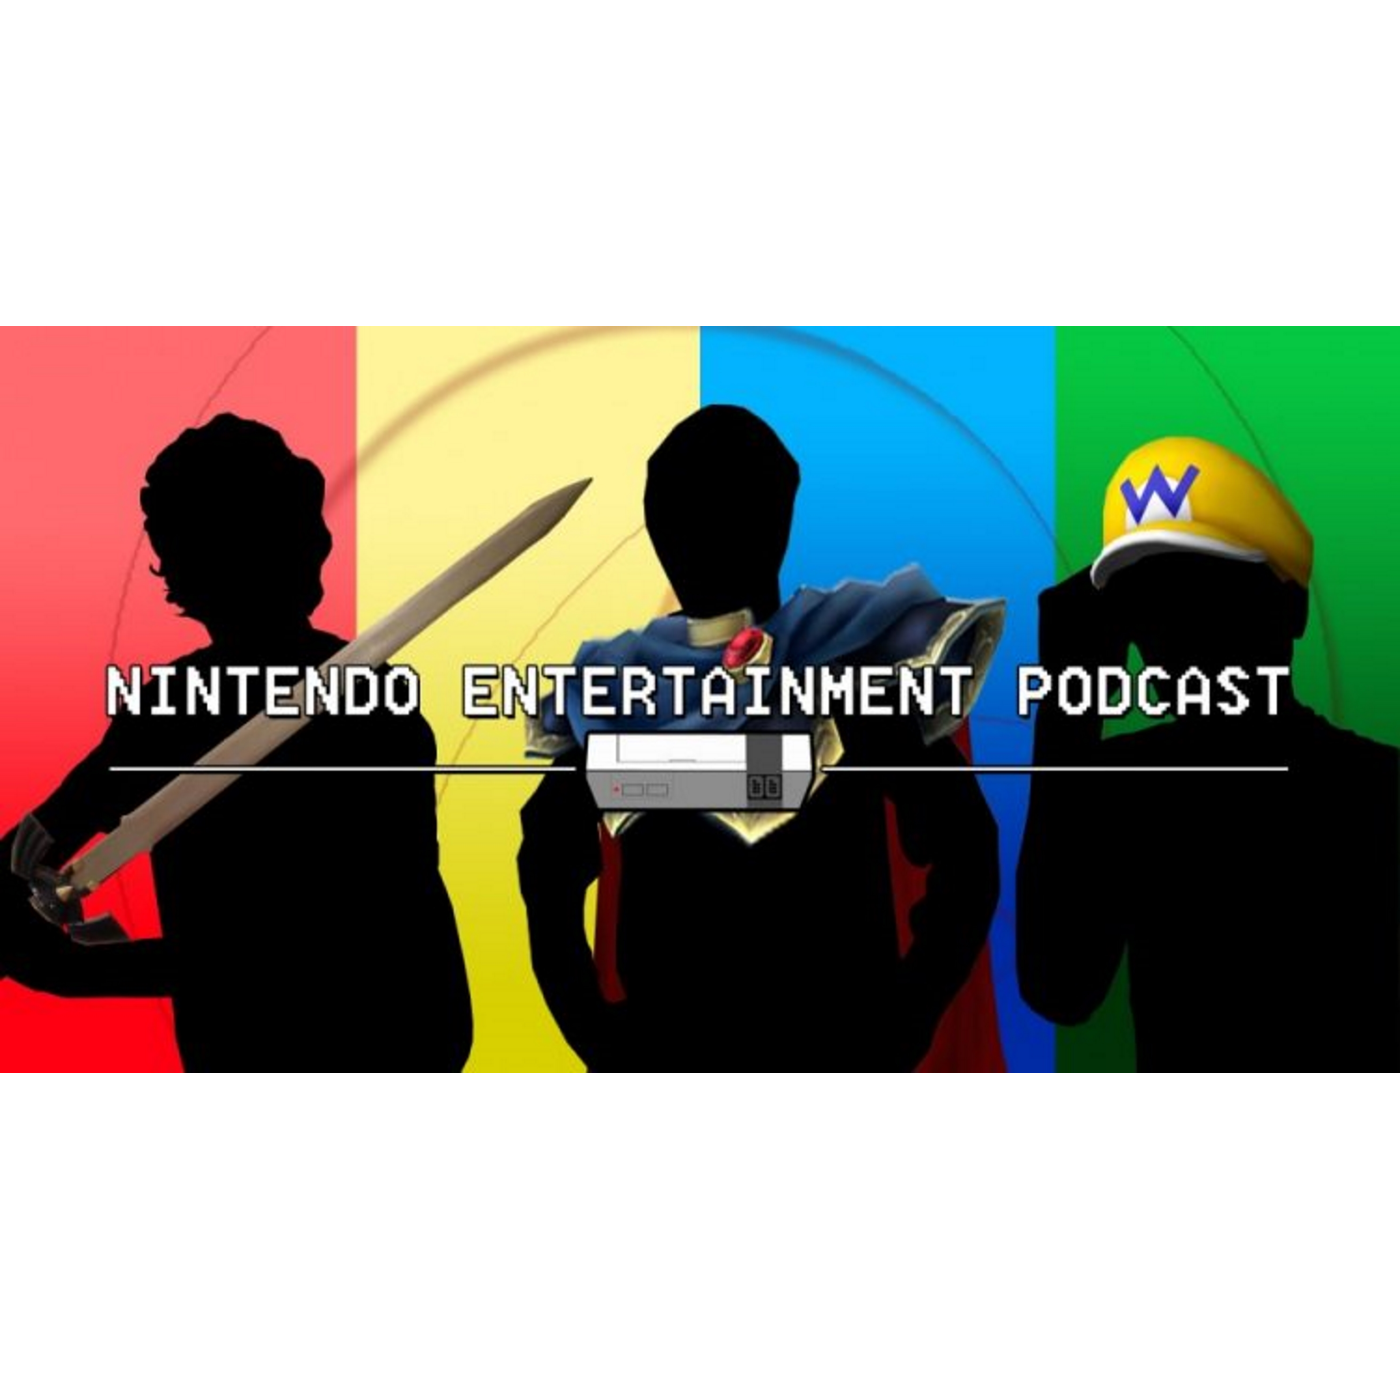 The Nintendo Entertainment Podcast